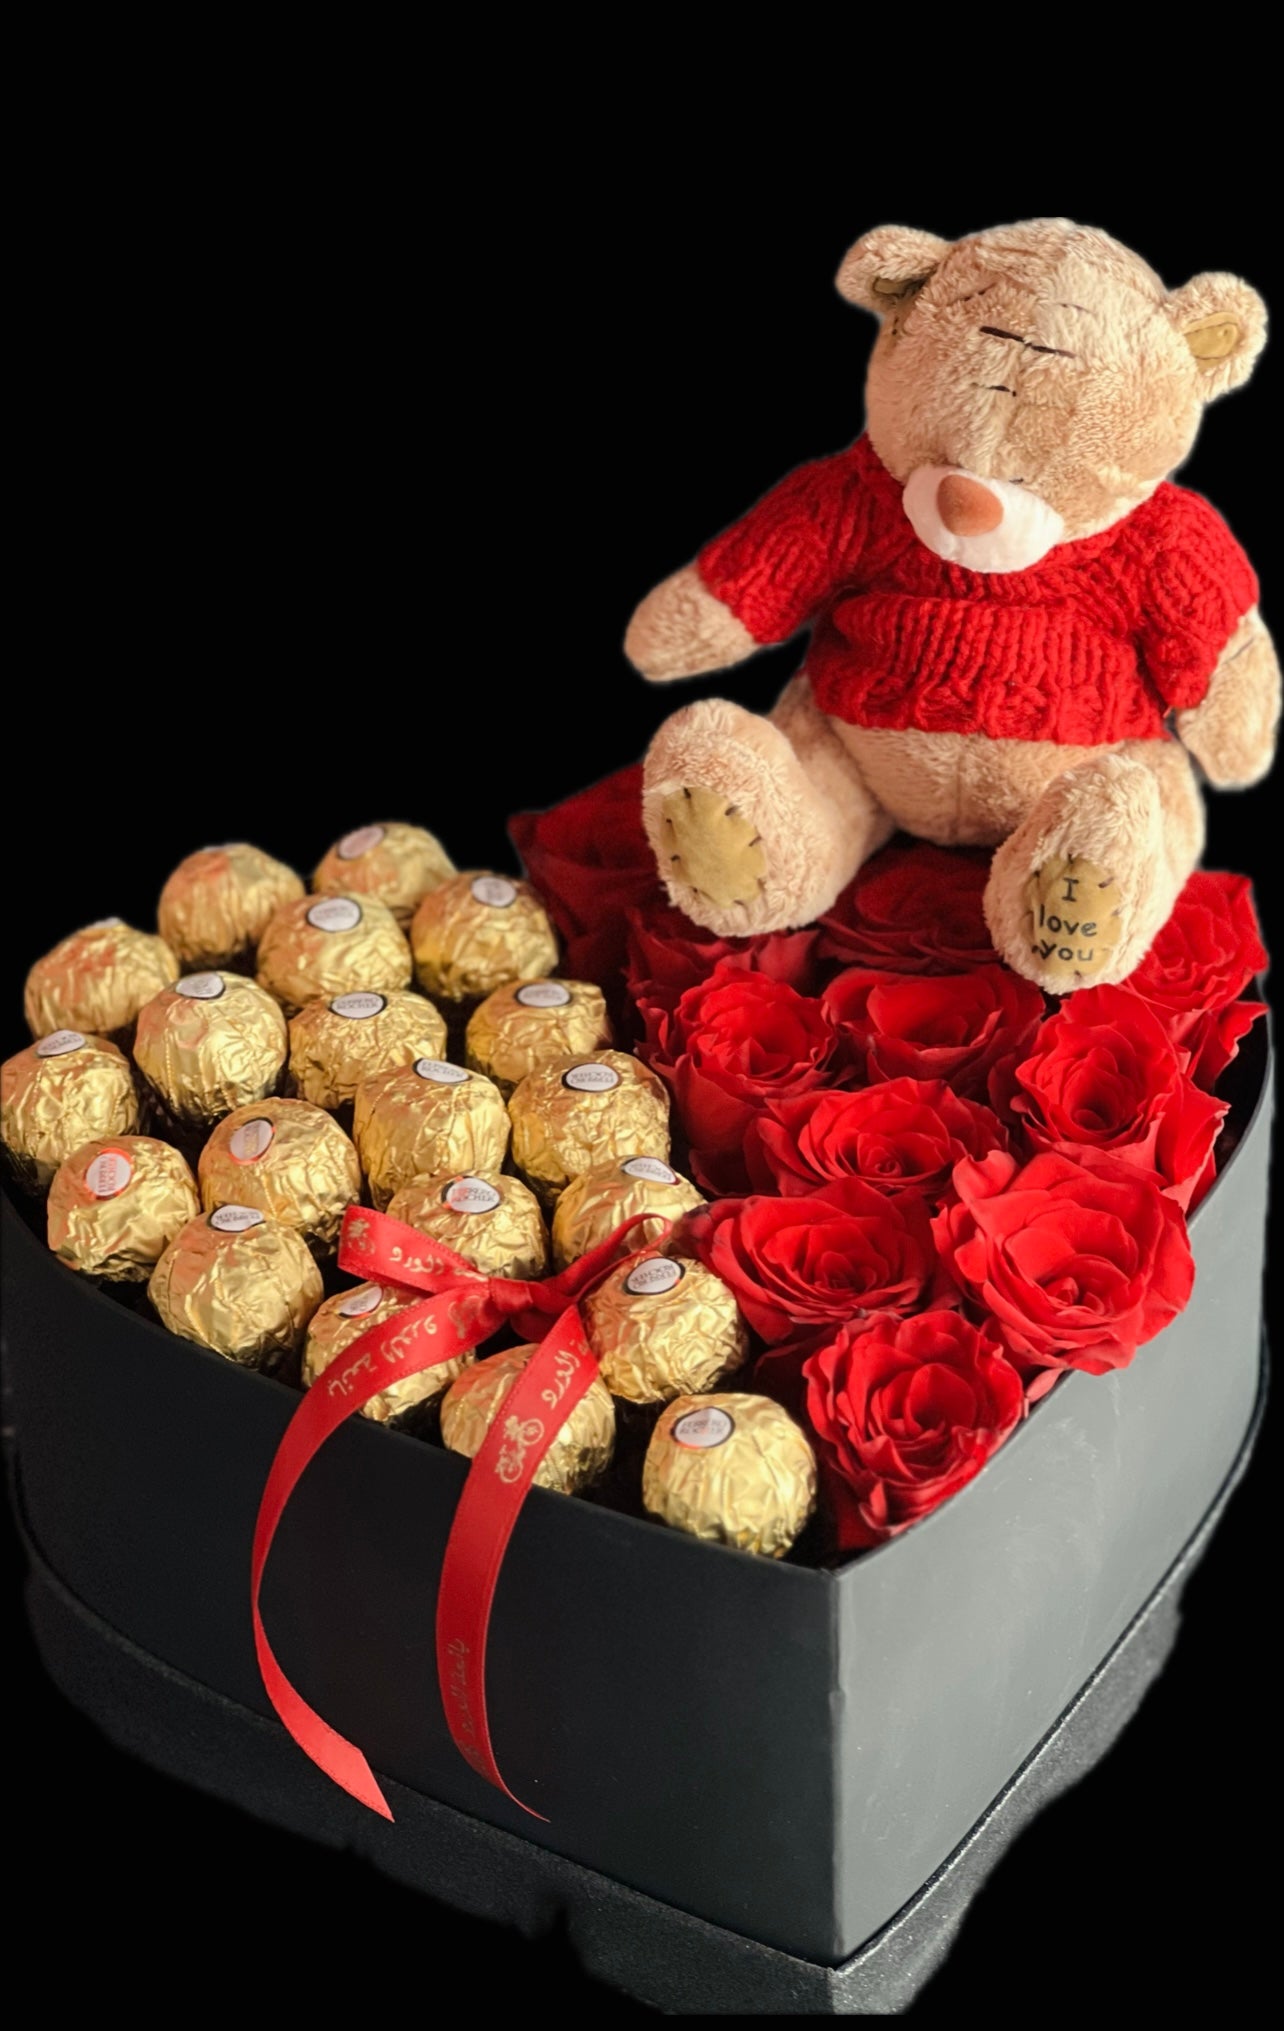 Valentine box with teddy bear